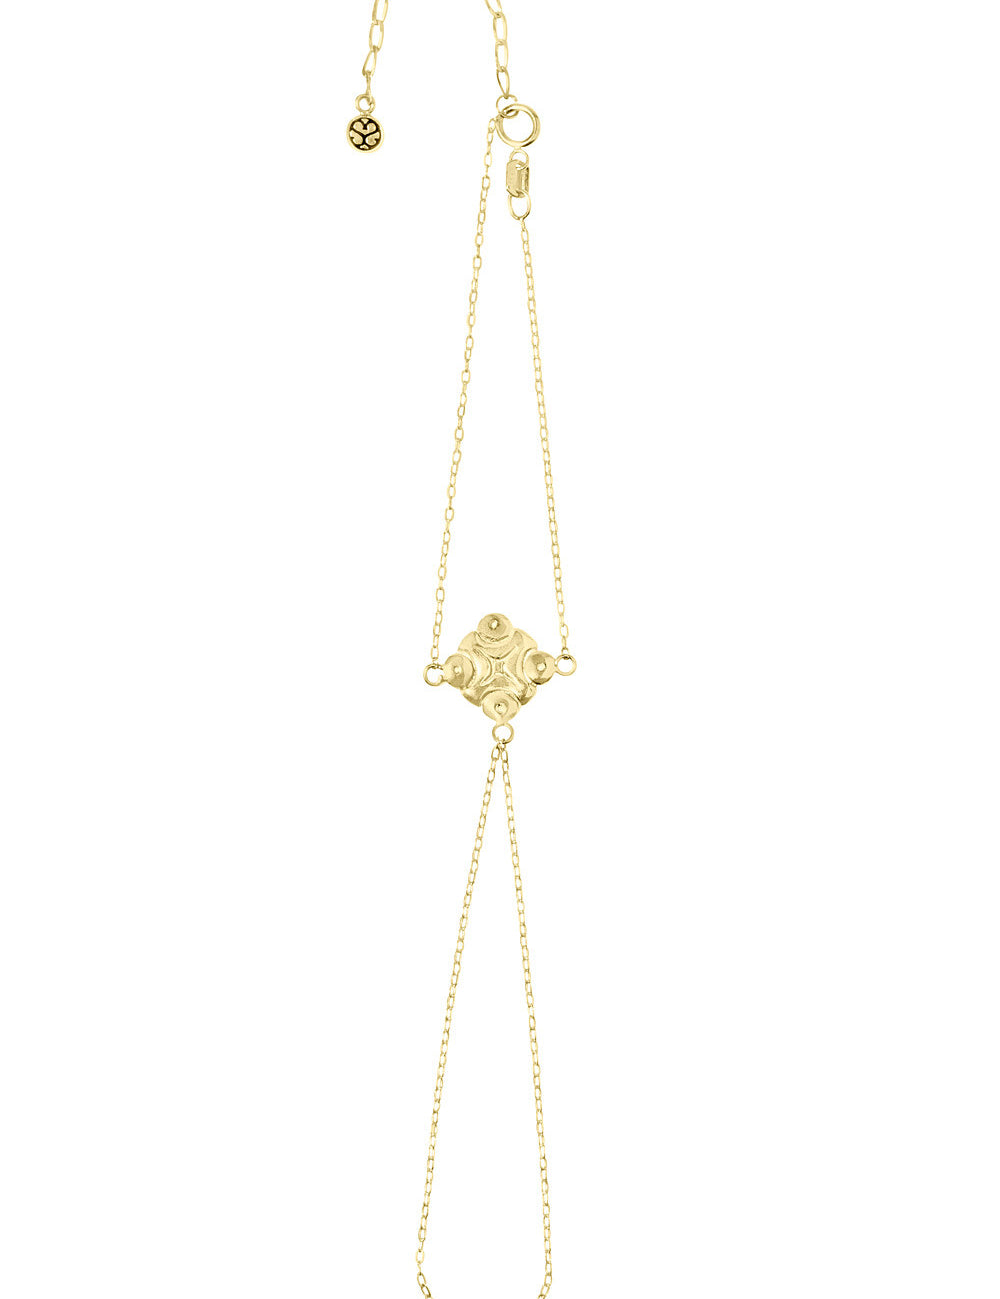 Gold Dipped Maya Symbol Hand Jewelry - Sophie Simone Designs